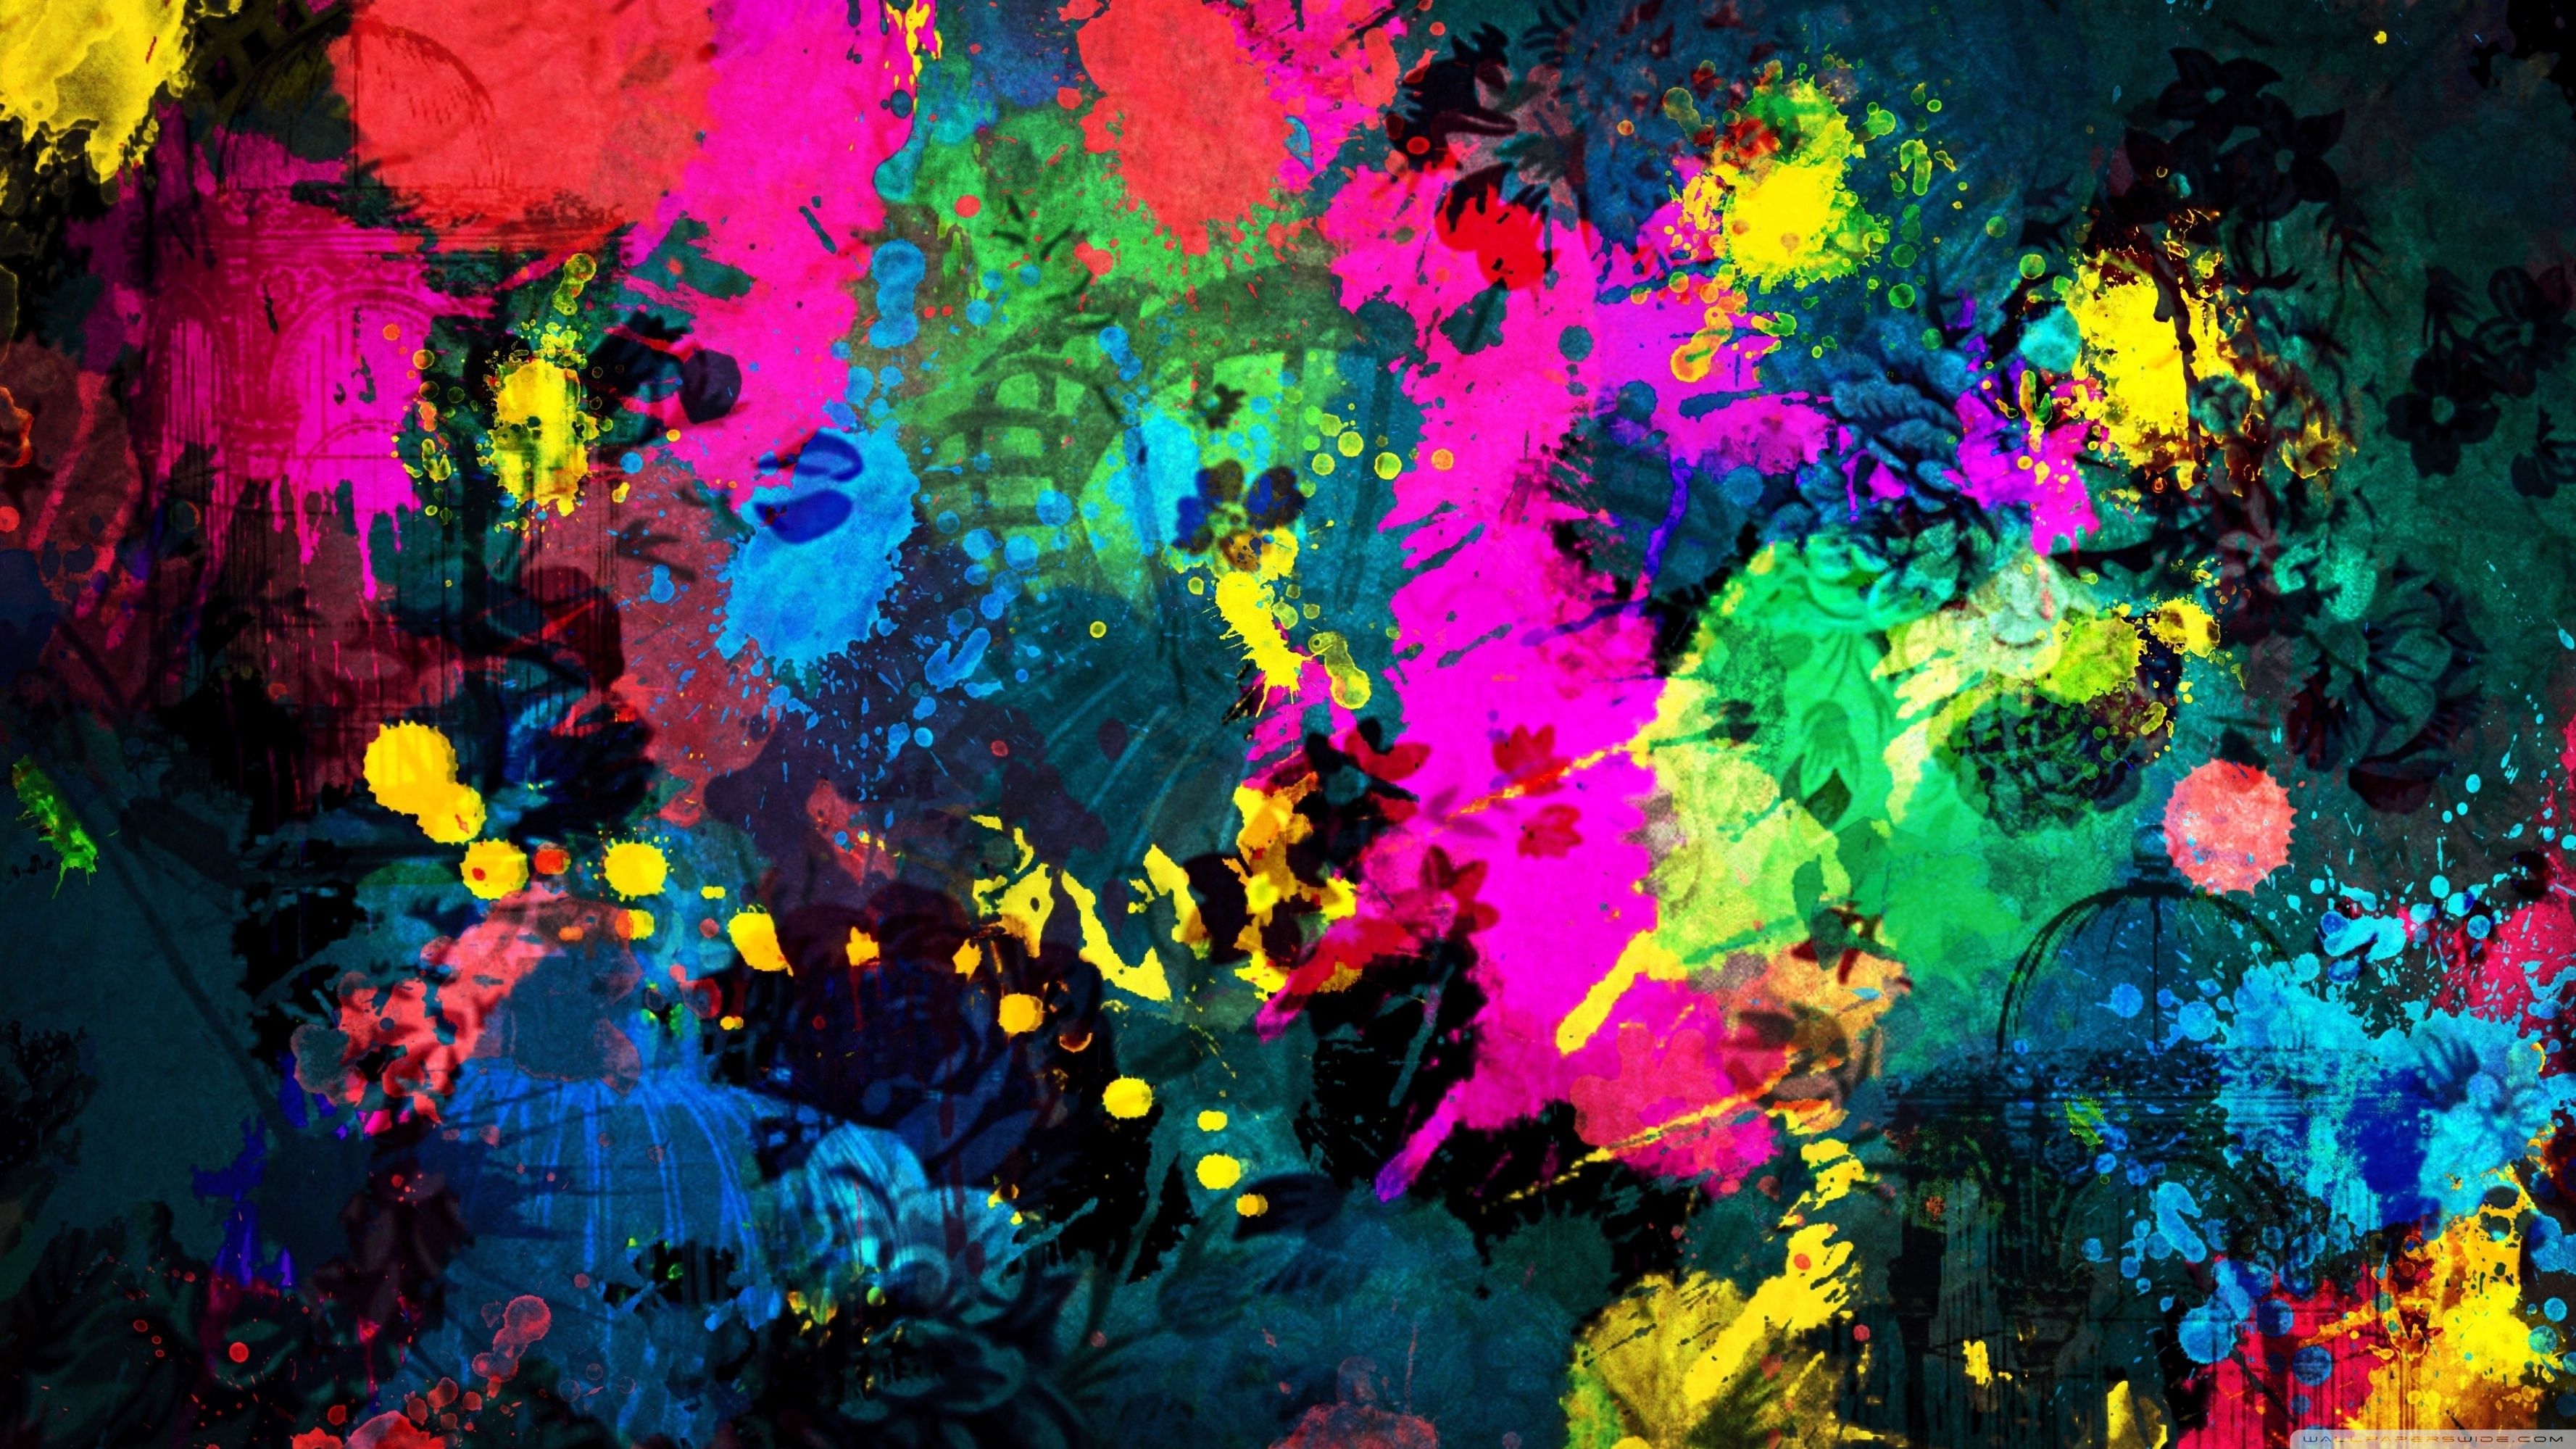 Color Mix Pictures  Download Free Images on Unsplash